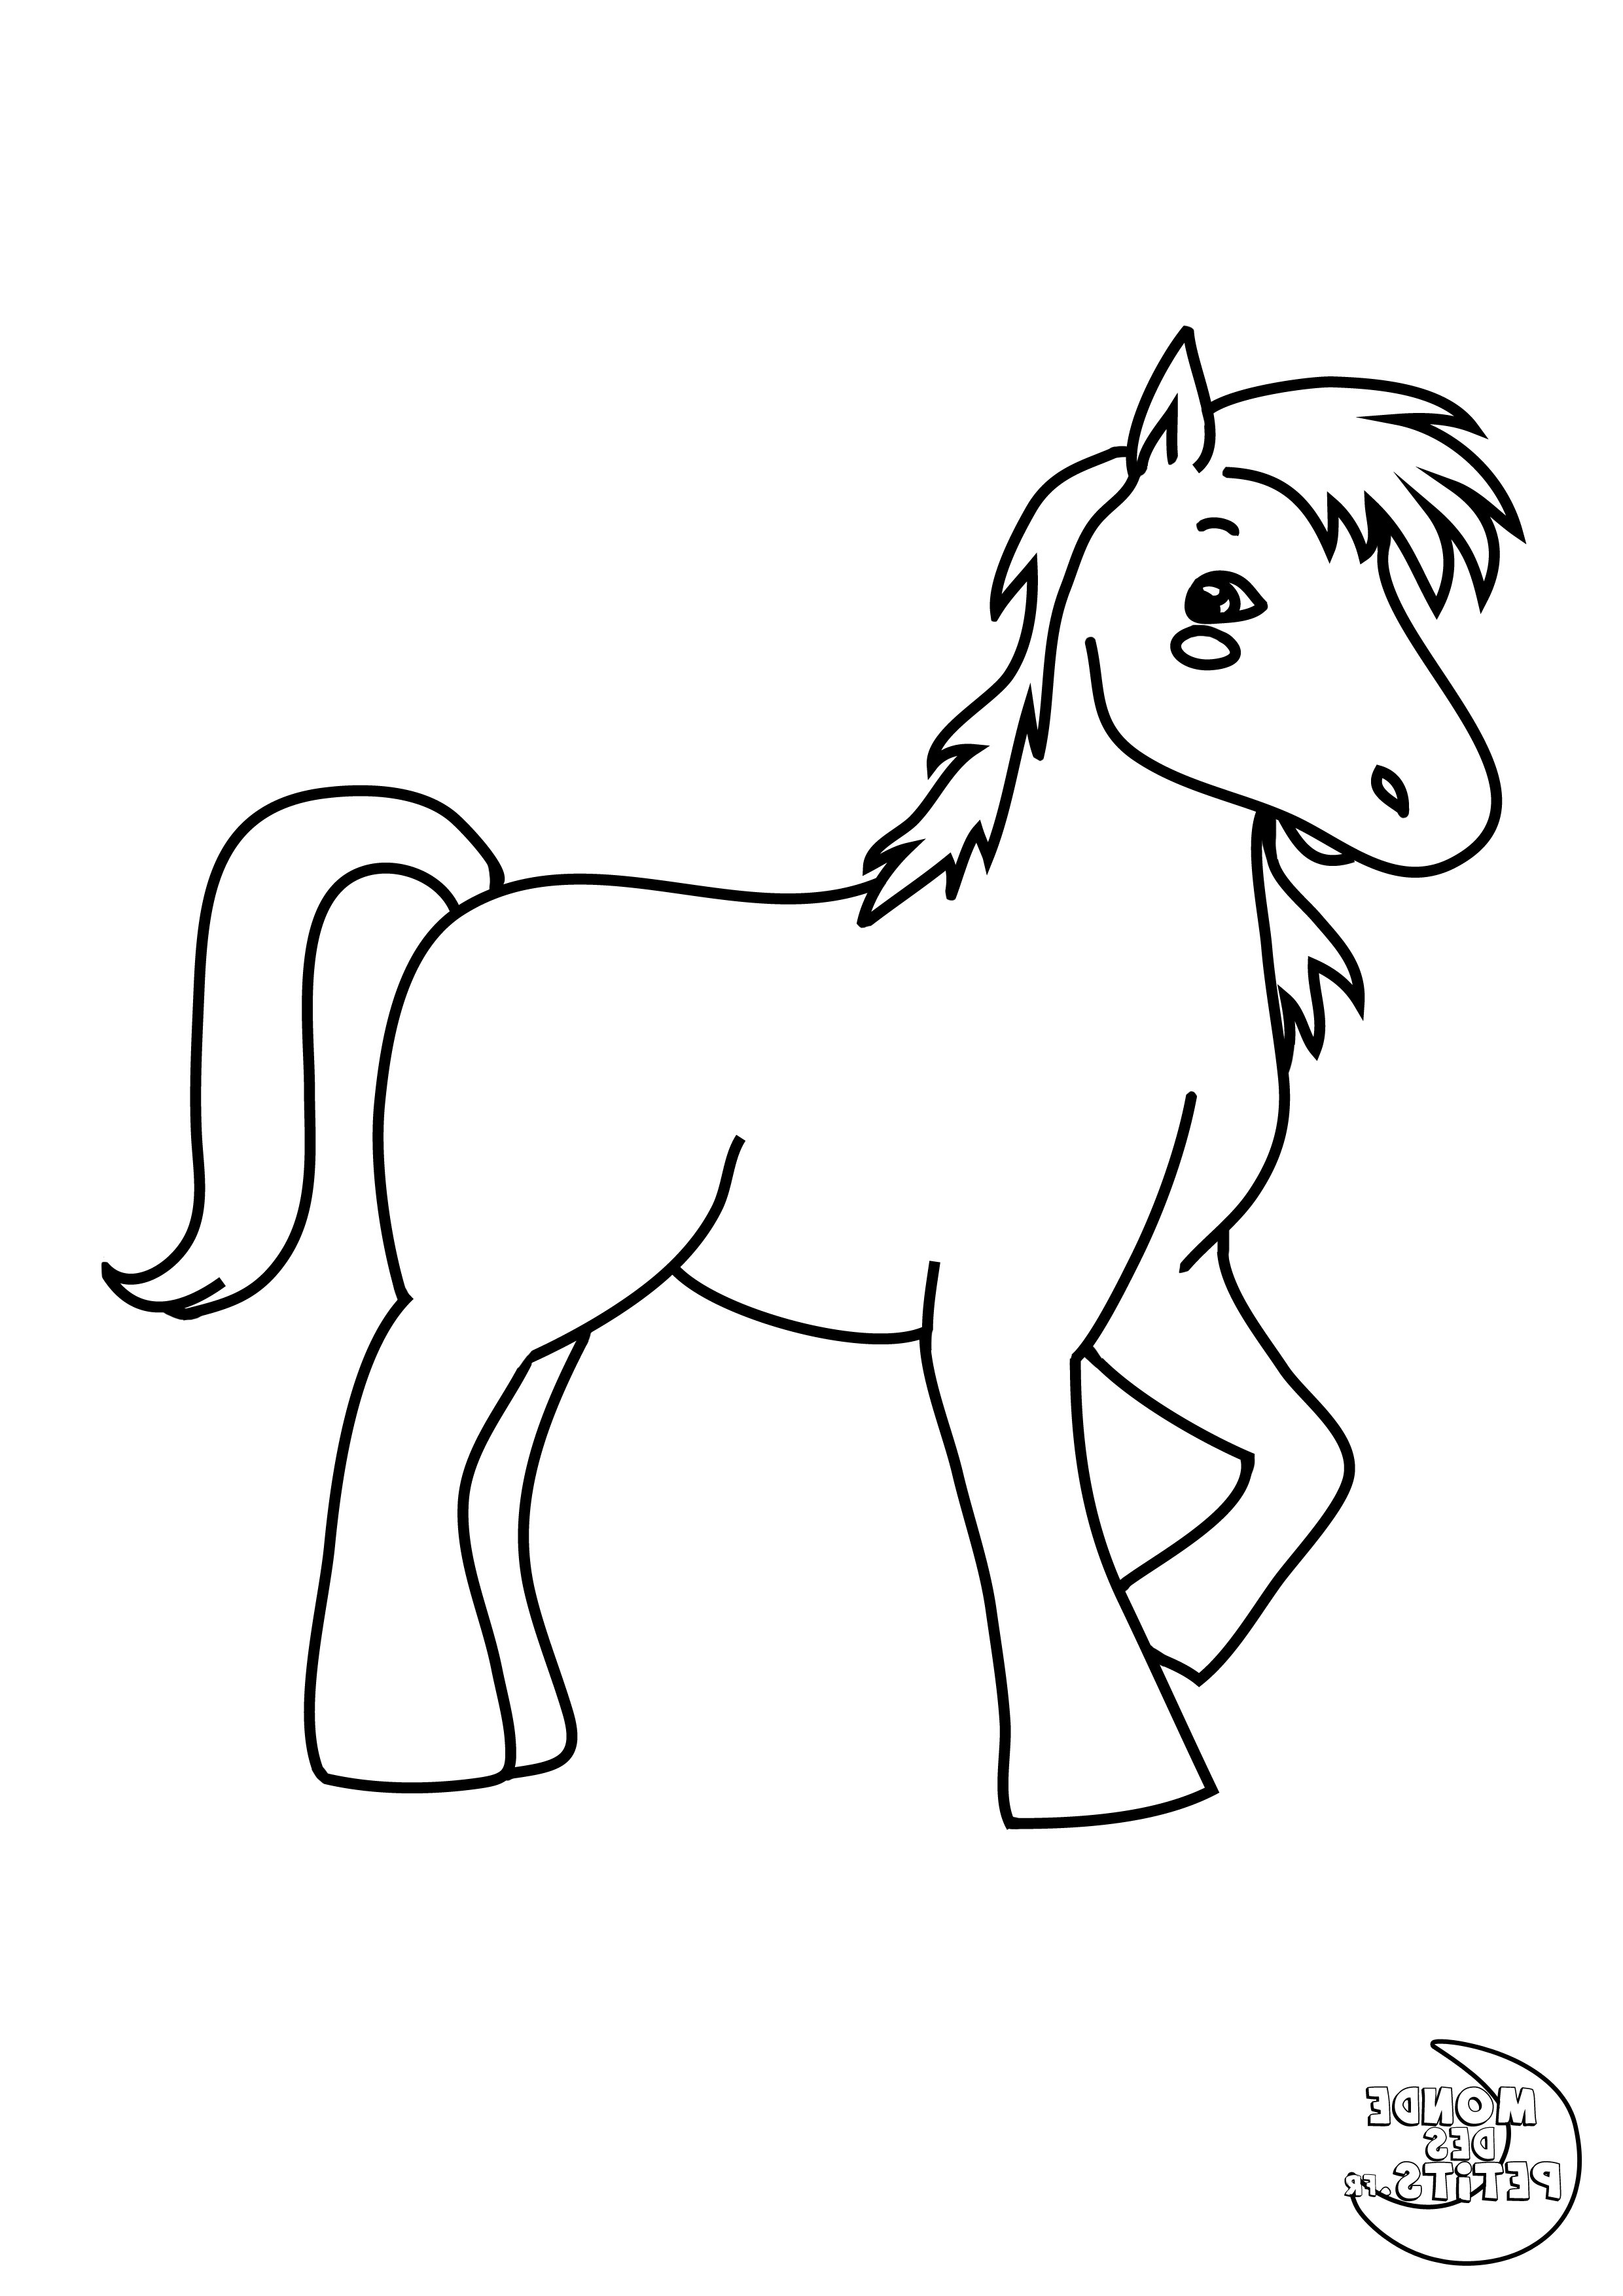 coloriage princesse sur son cheval dessin cheval coloriage avec coloriage princesse sur son cheval dessin cheval coloriage et dessiner un cheval facile 31 1180x1024px dessiner un cheval facile